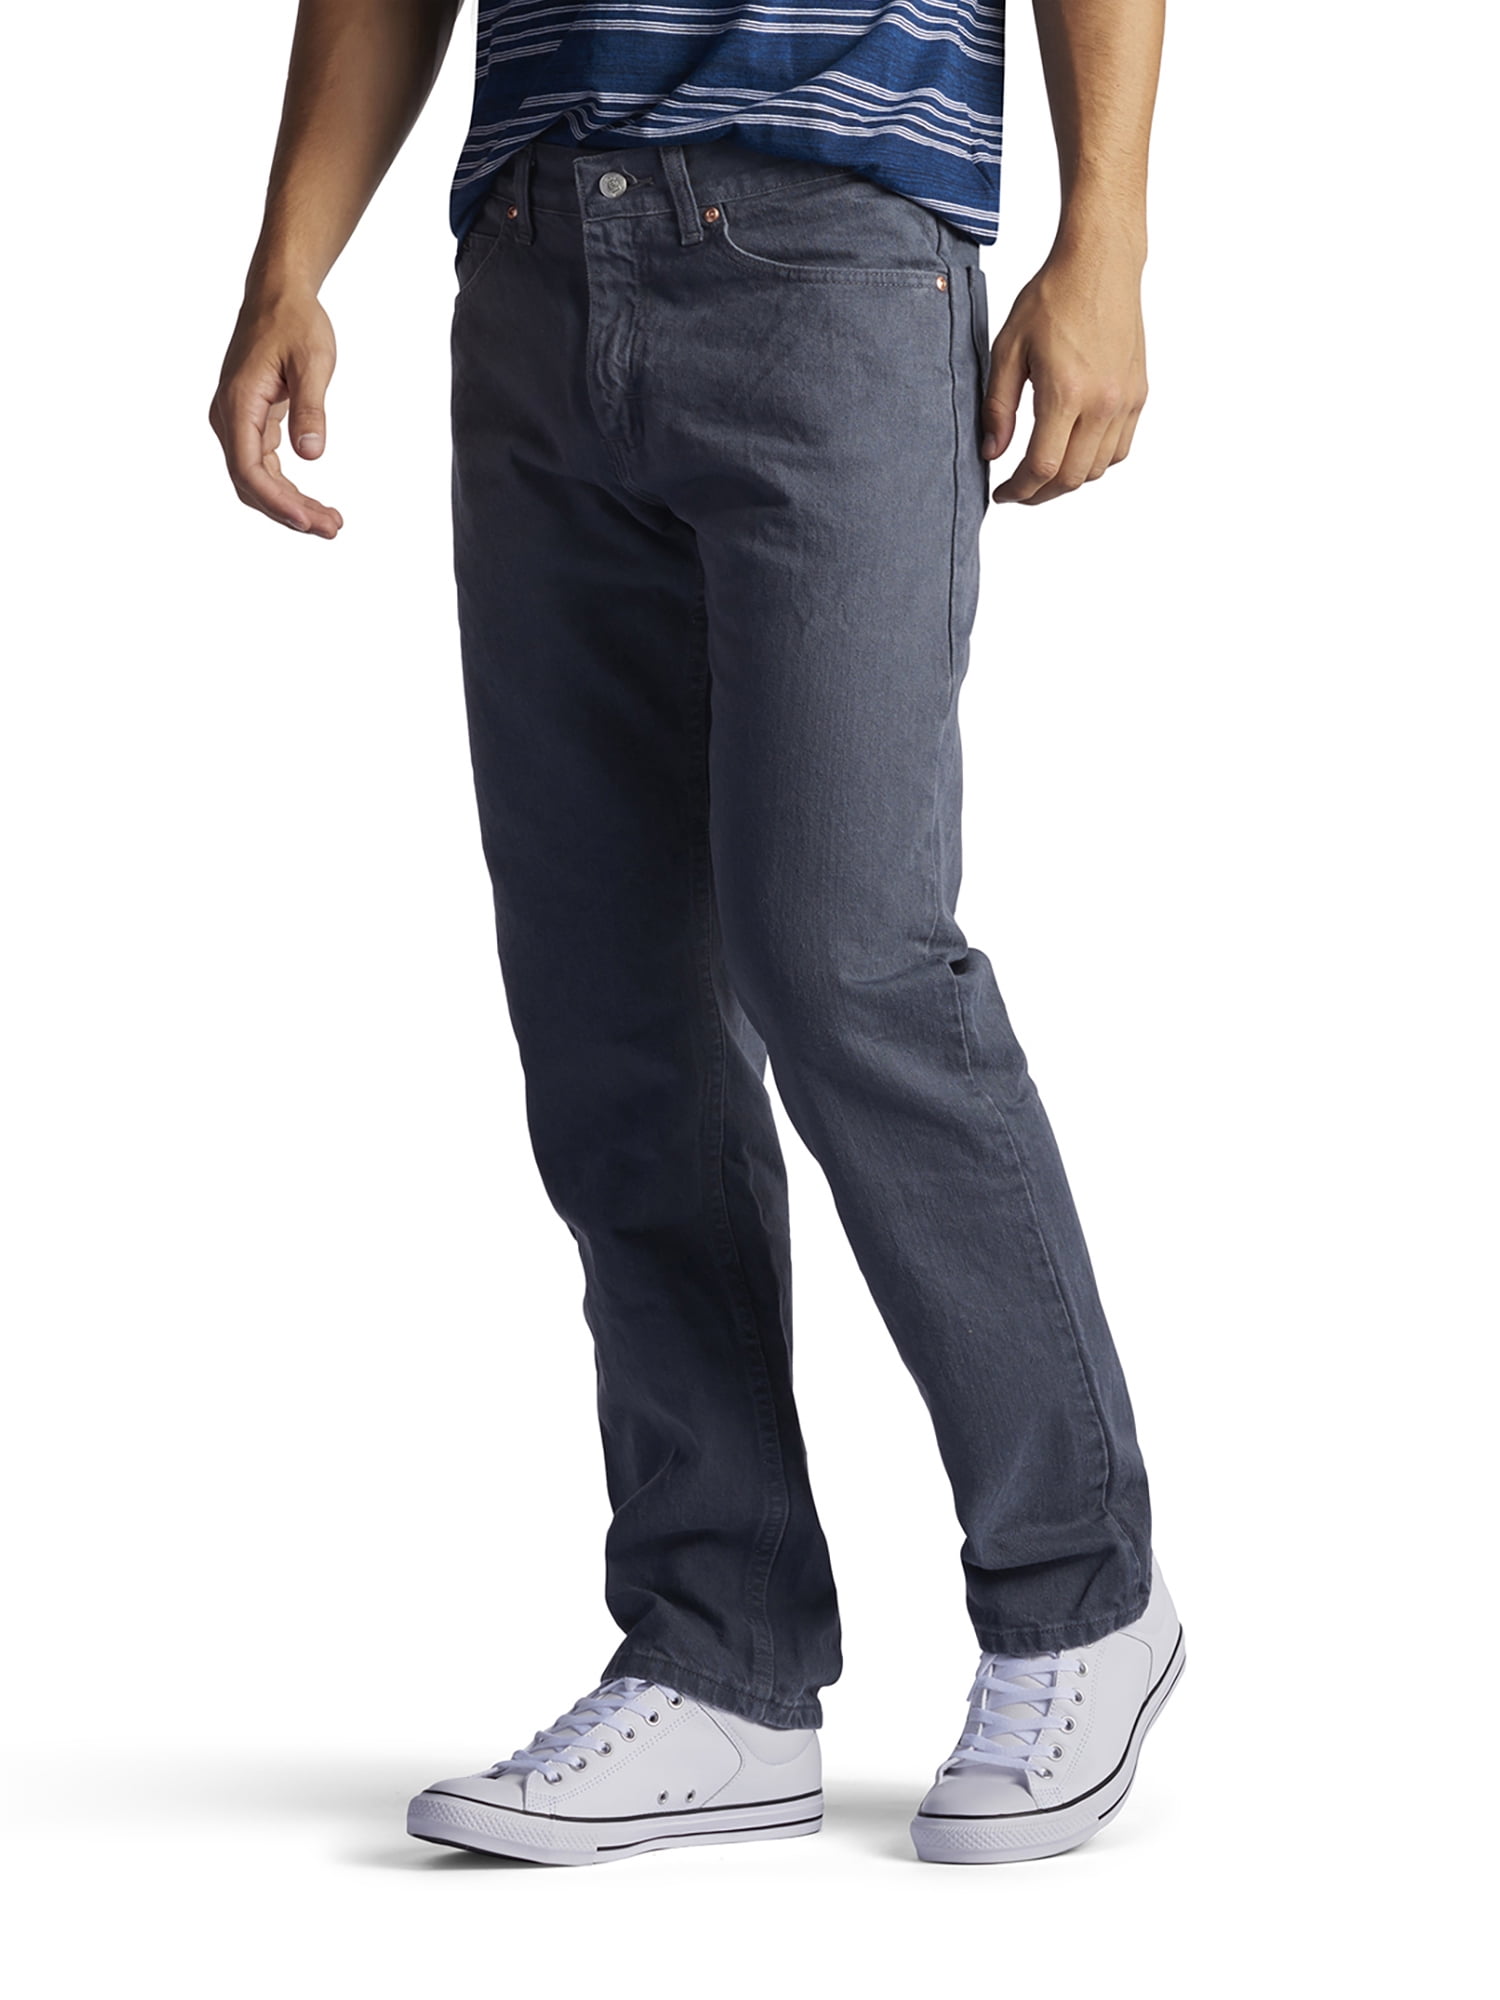 Lee Men's Regular Fit Straight Leg Jean, Orion, 36W x 30L | Walmart Canada